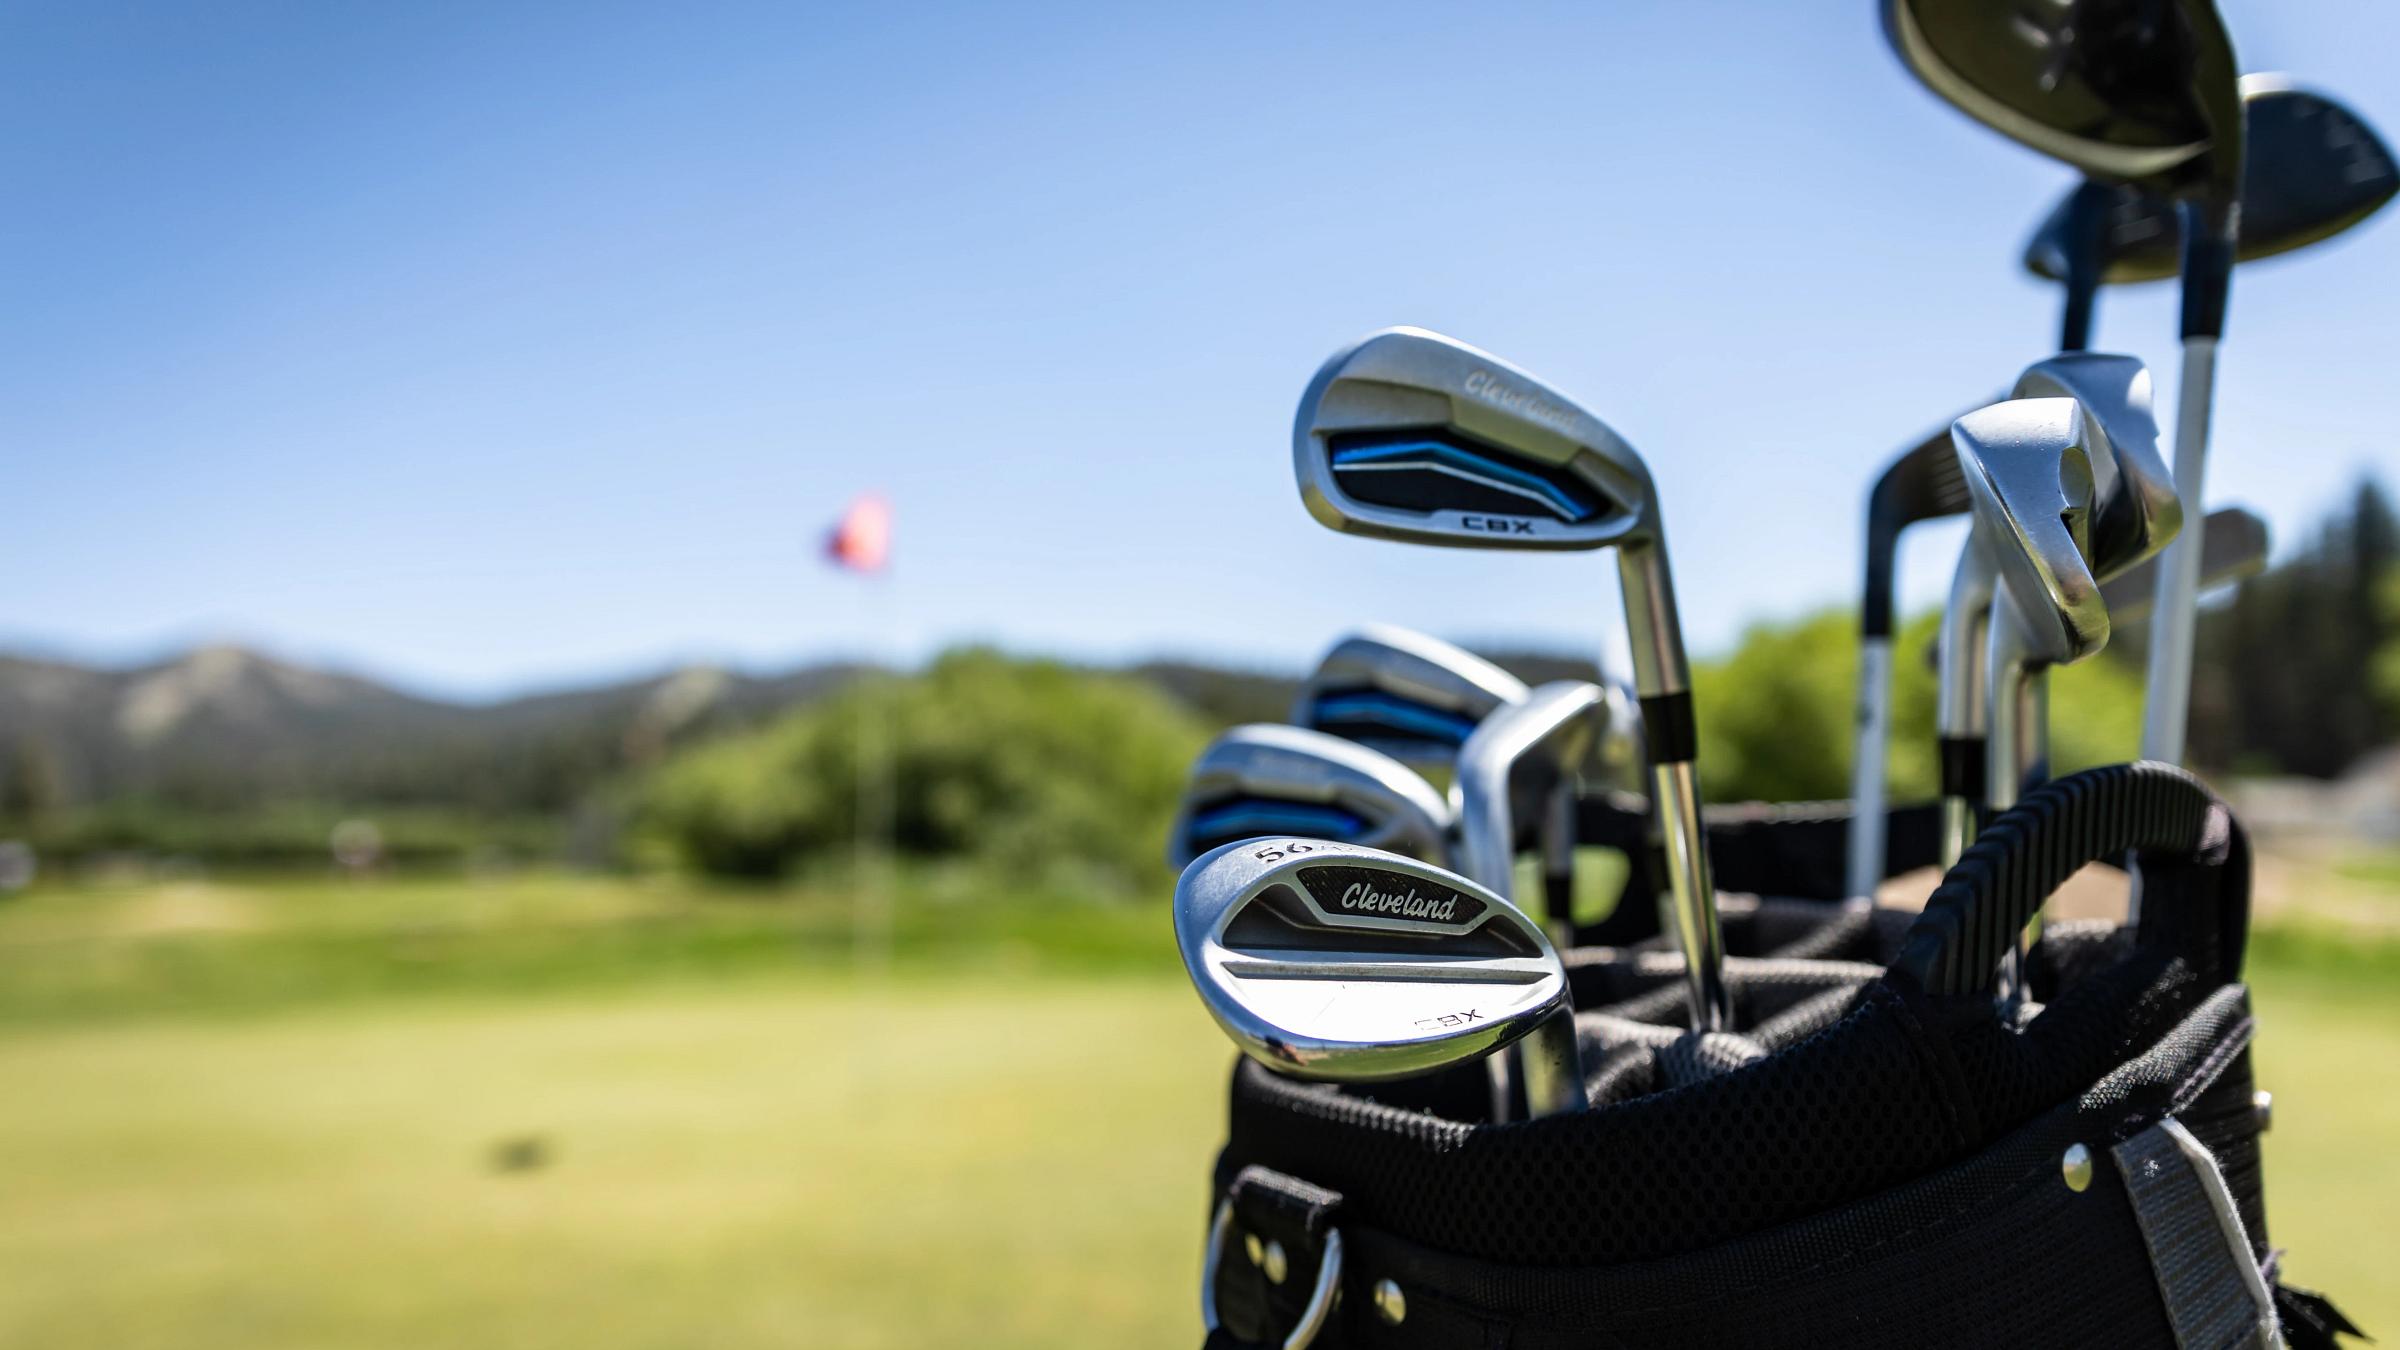 Golf clubs in golf bag.